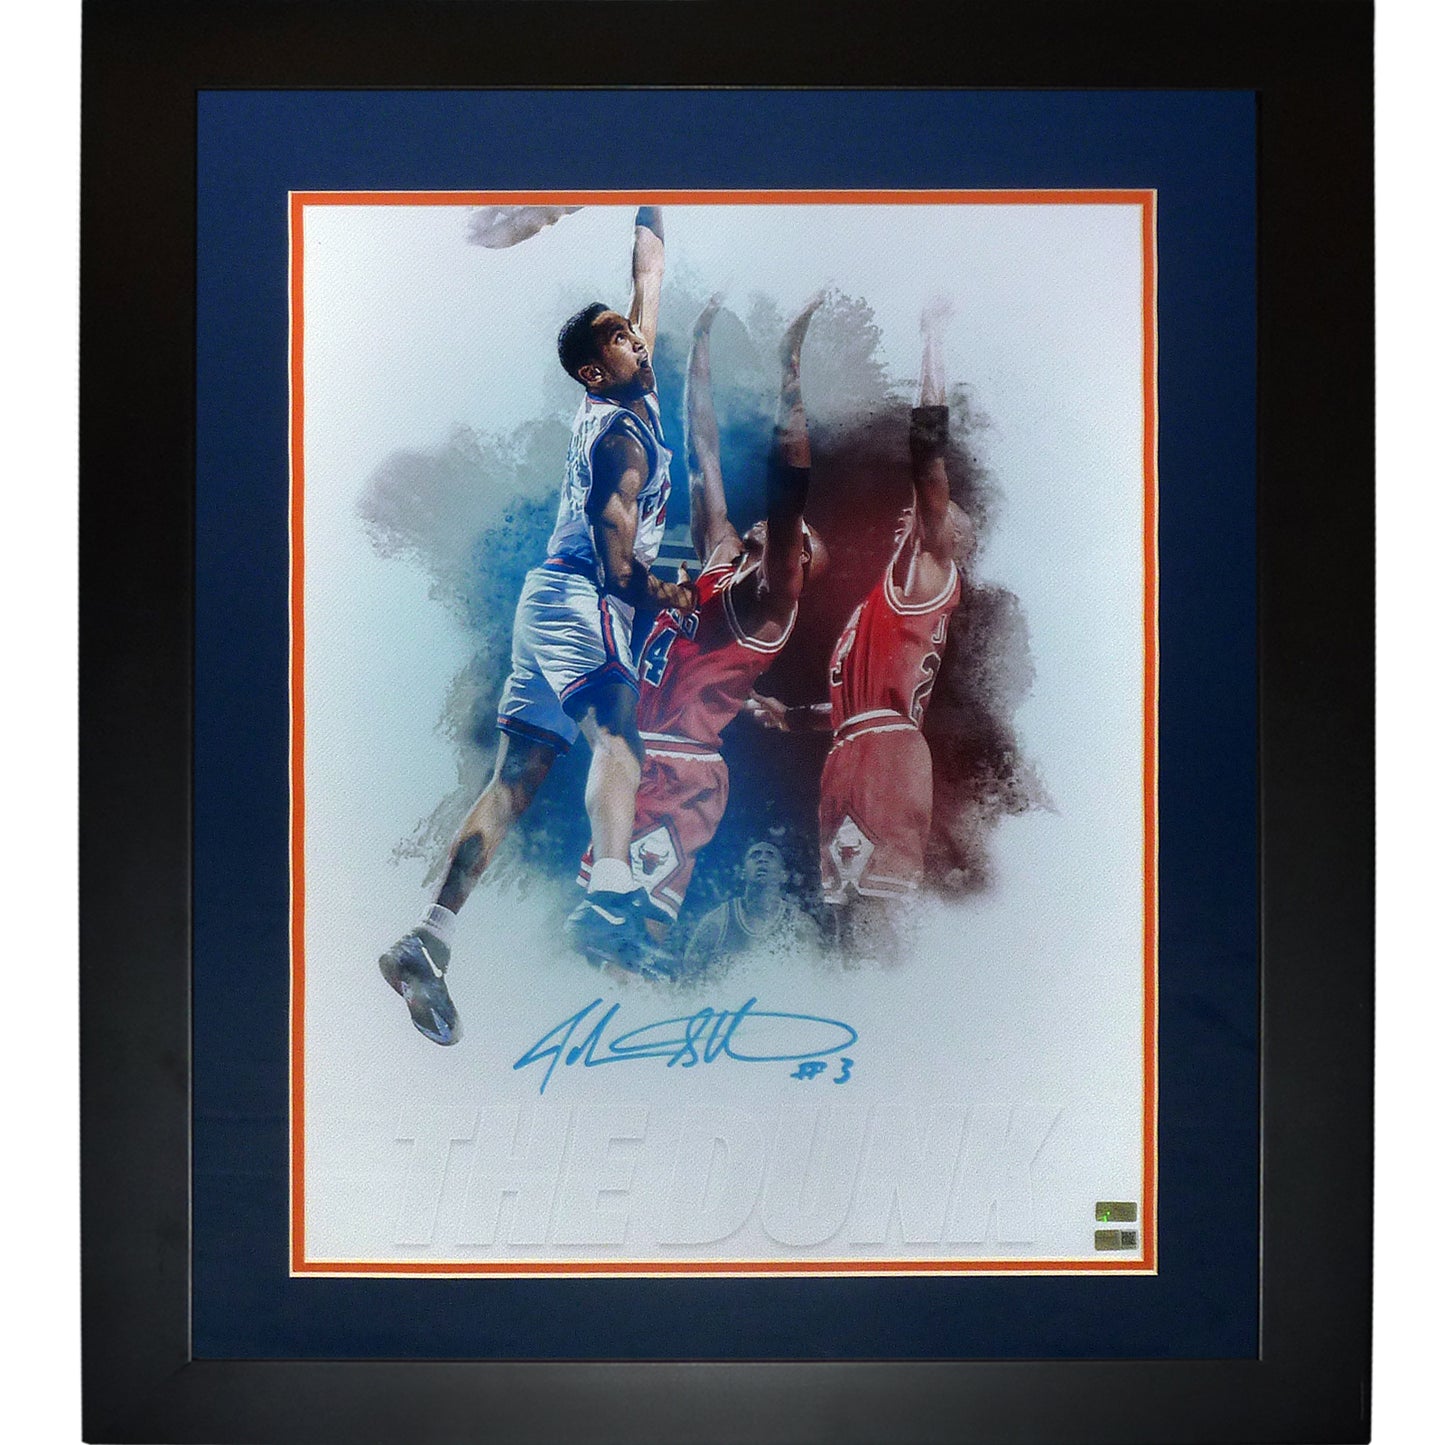 John Starks Autographed New York Knicks (Dunk on Jordan) Deluxe Framed 16x20 Photo